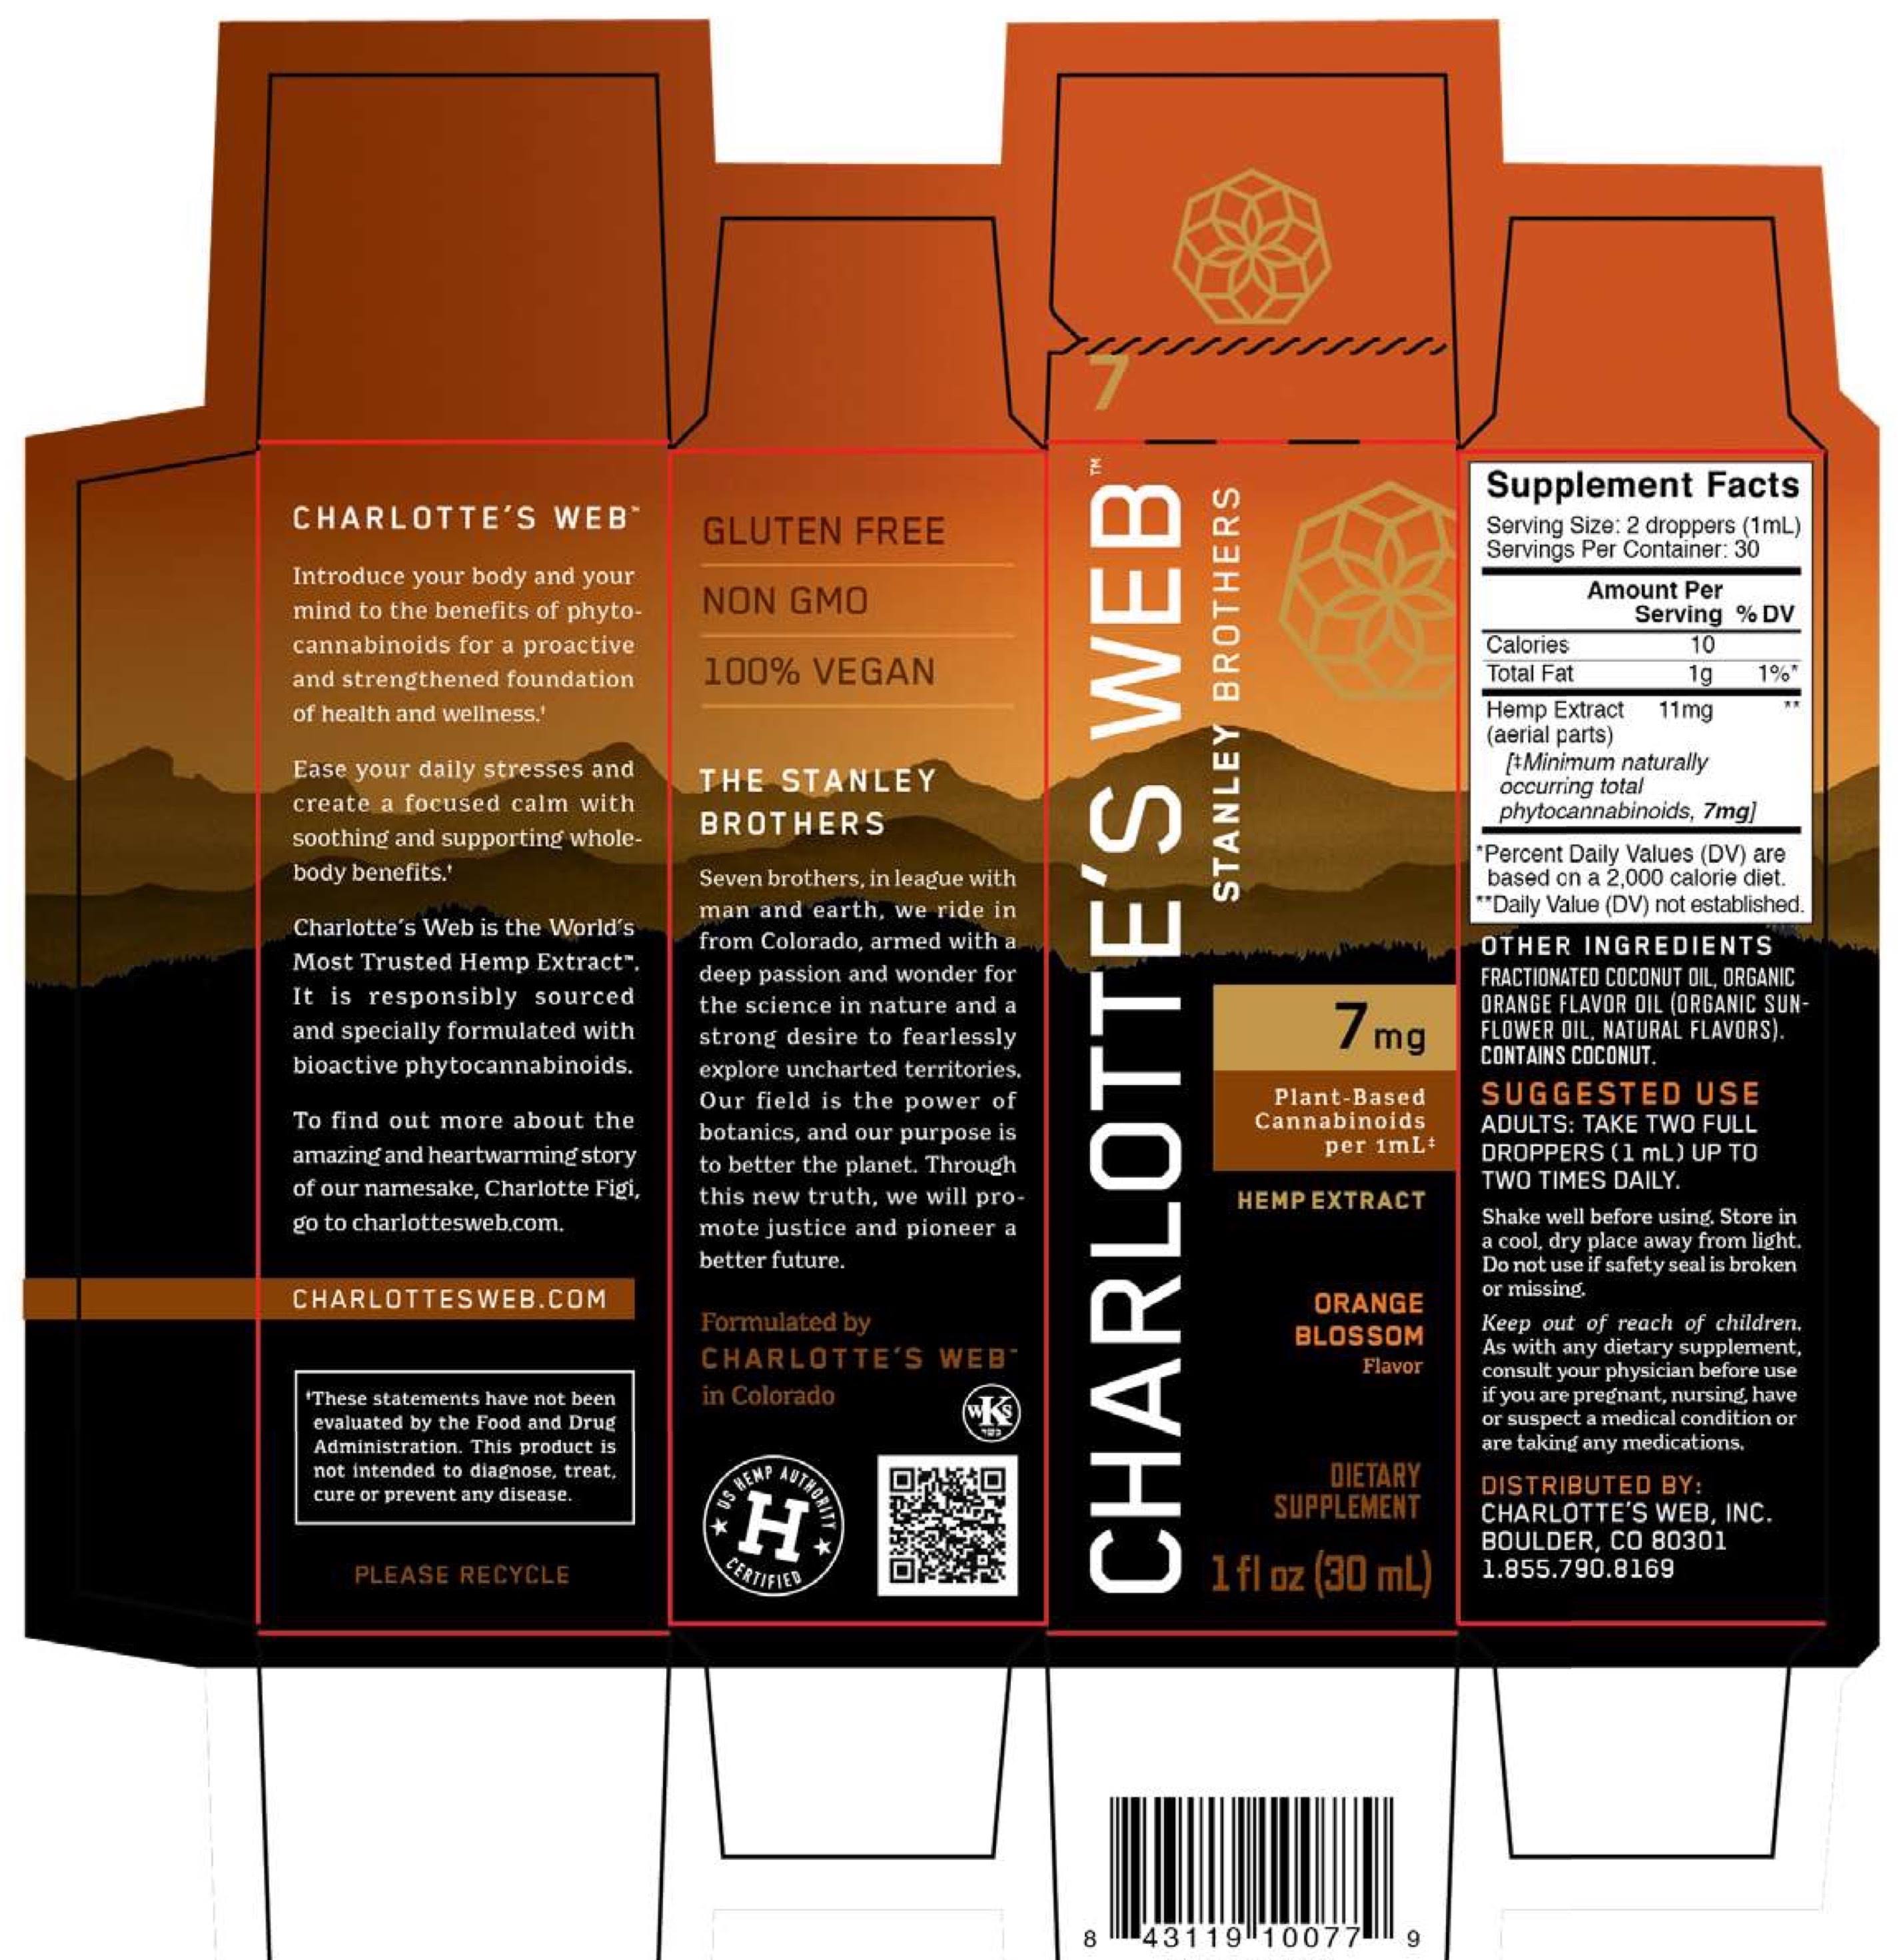 Charlottes Web Hemp Extract, 7 mg, Orange Blossom Flavor - 1 fl oz